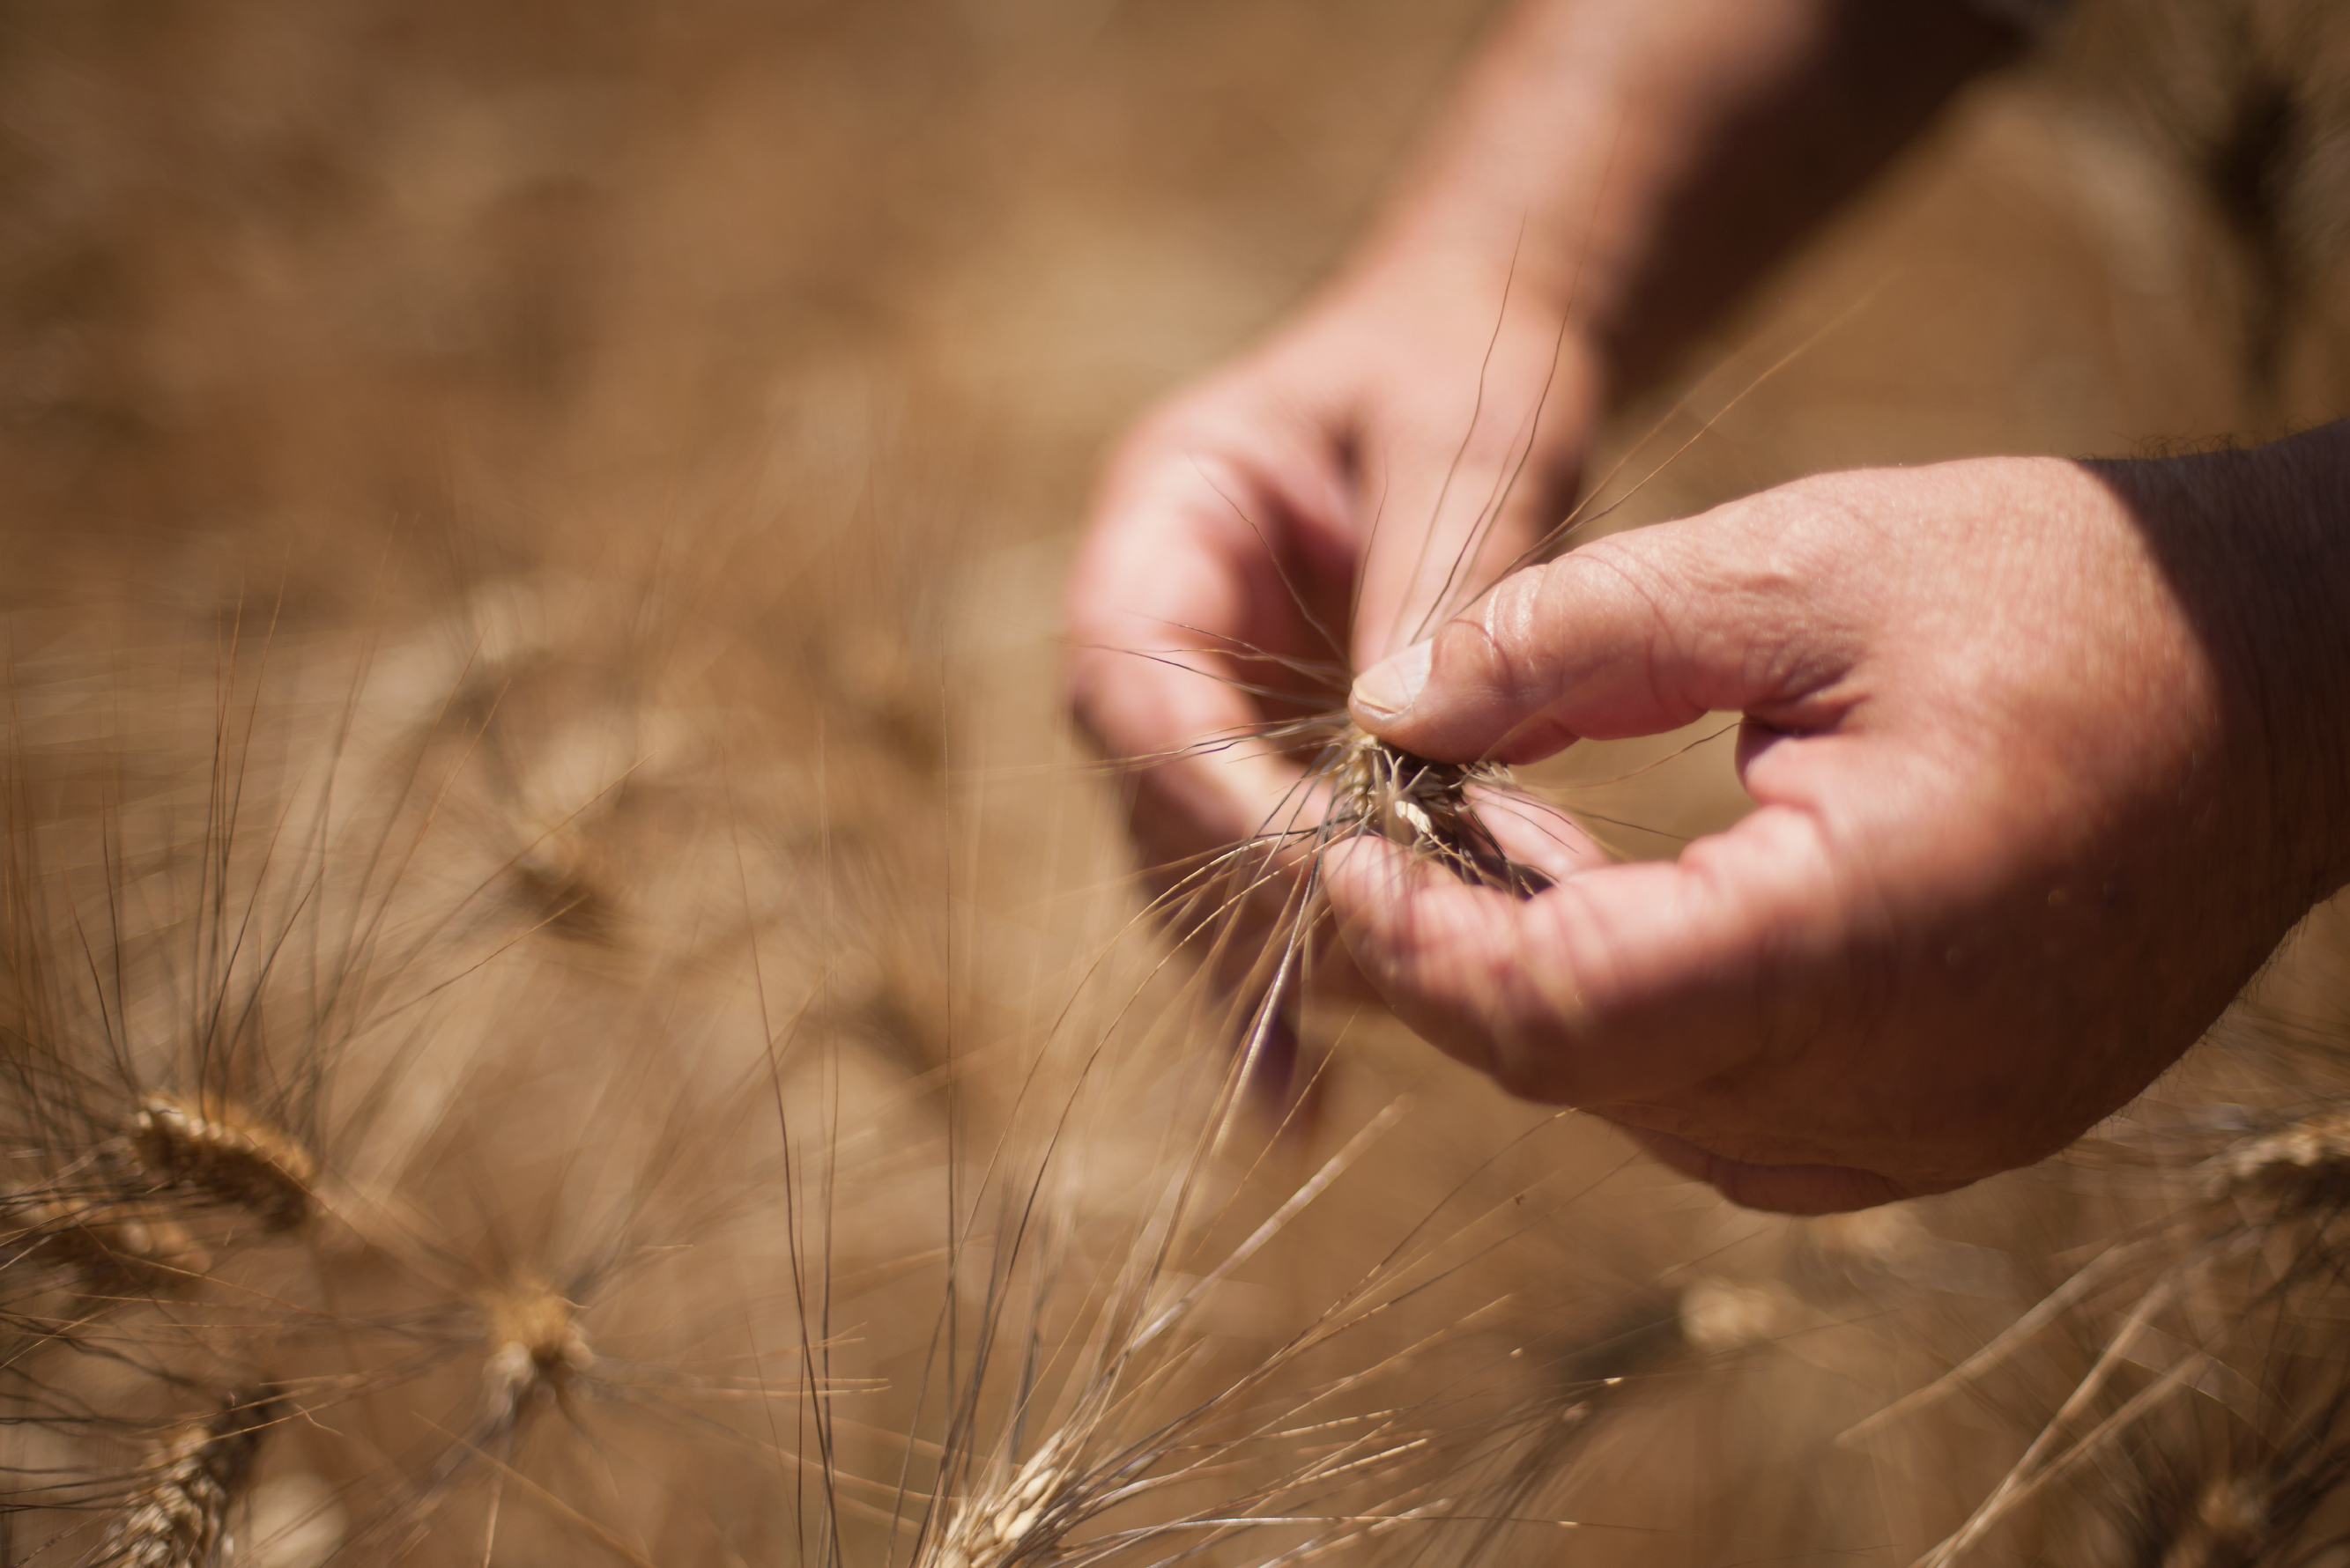 Australian grain leader implements Eka ahead of bumper crop season